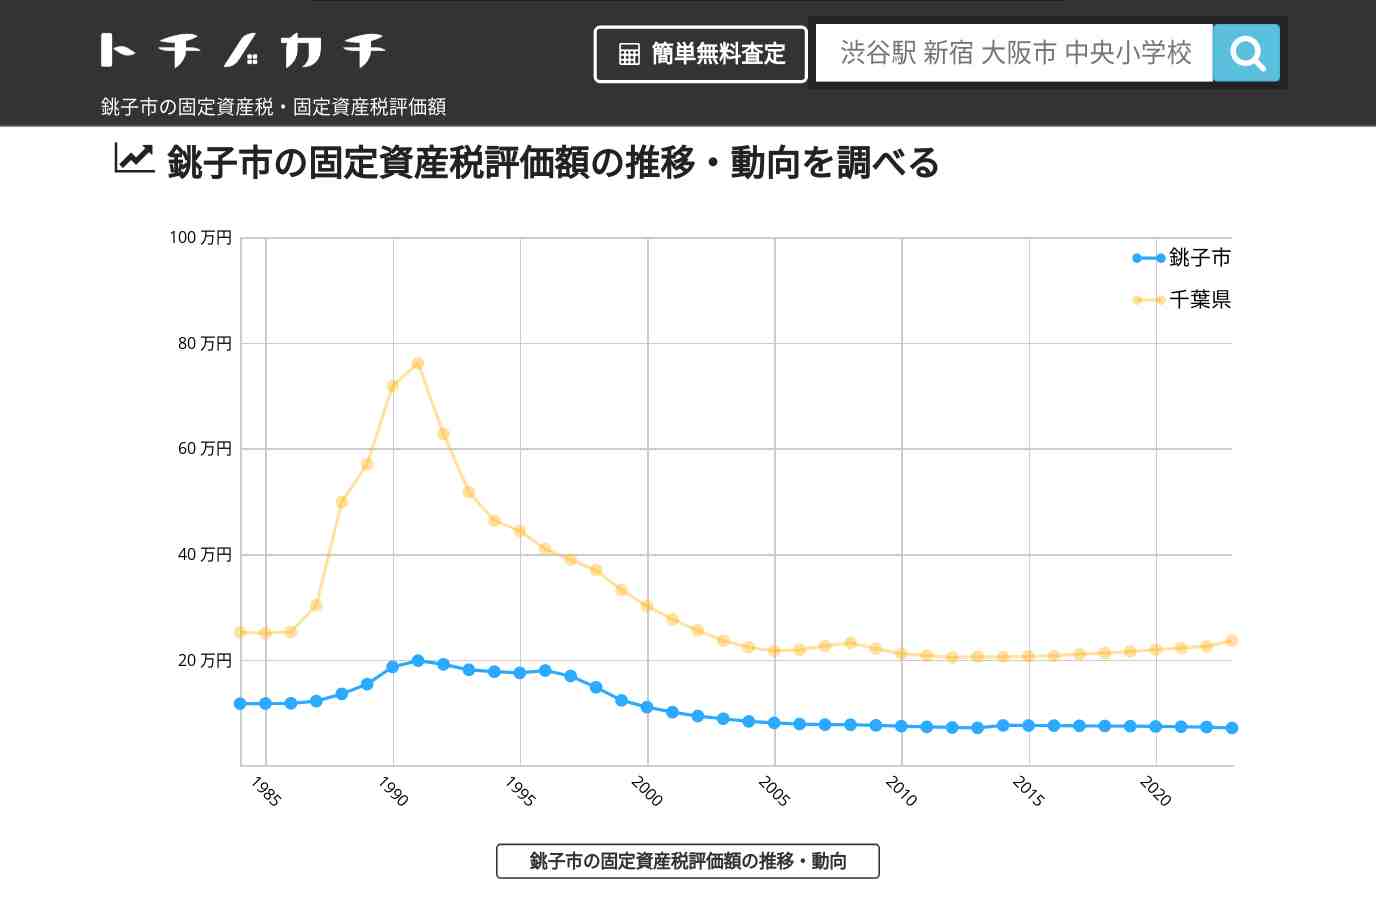 高神小学校(千葉県 銚子市)周辺の固定資産税・固定資産税評価額 | トチノカチ